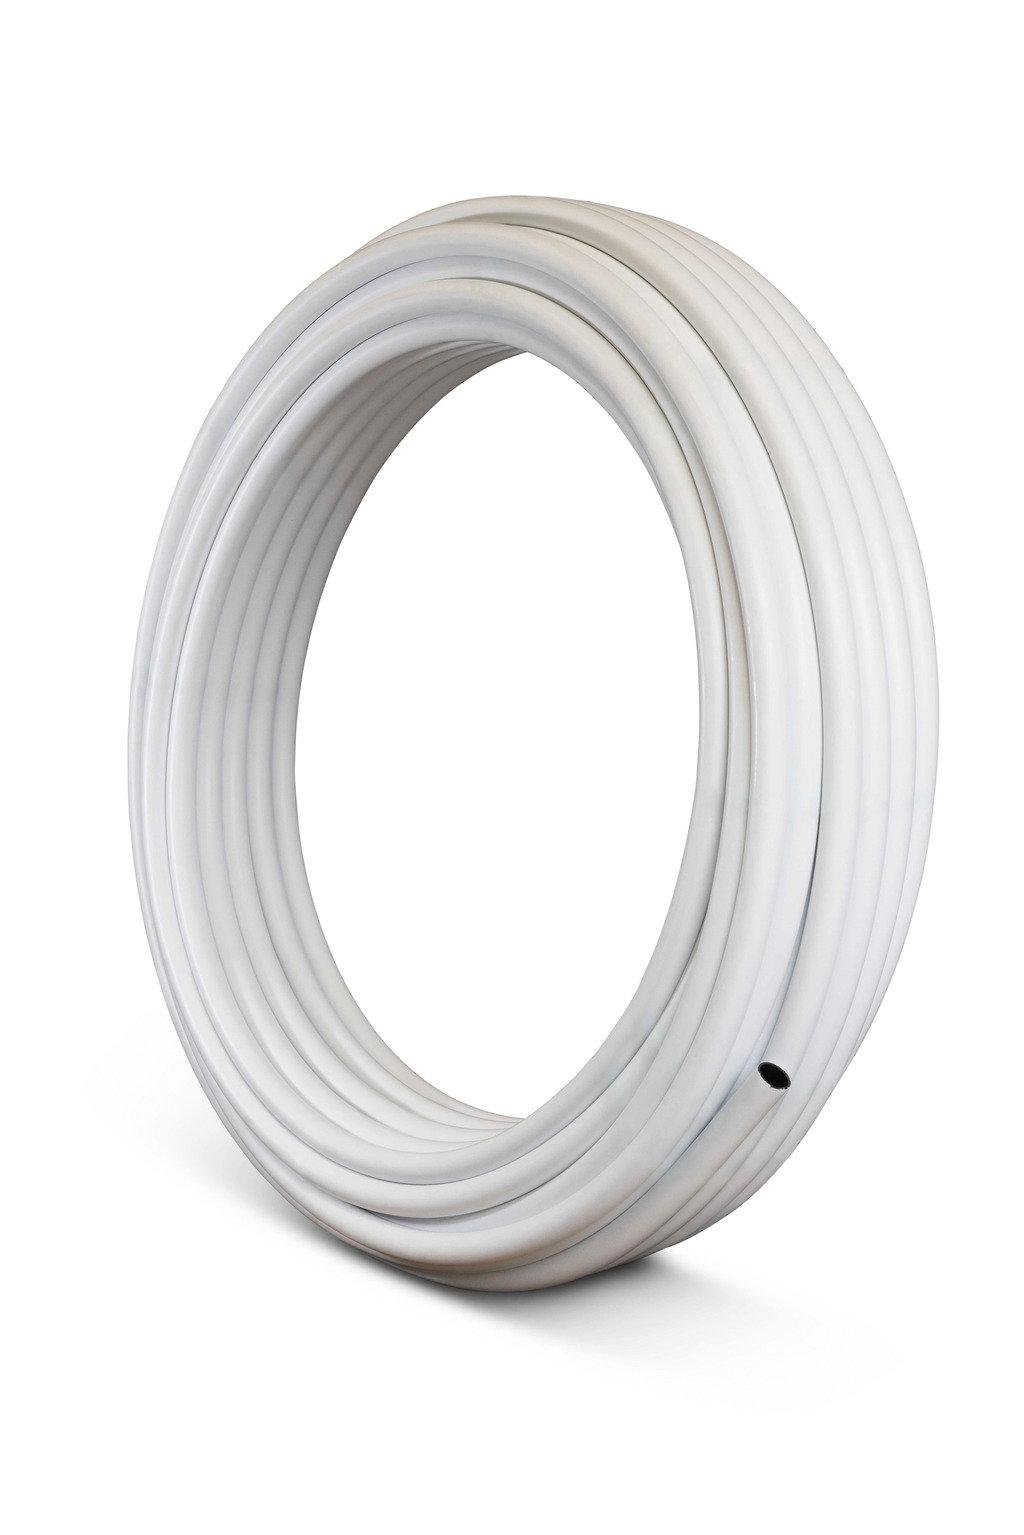 DN110 SDR13.6 Polyethylene Pipe White Telco  Co-Extruded White X 100M